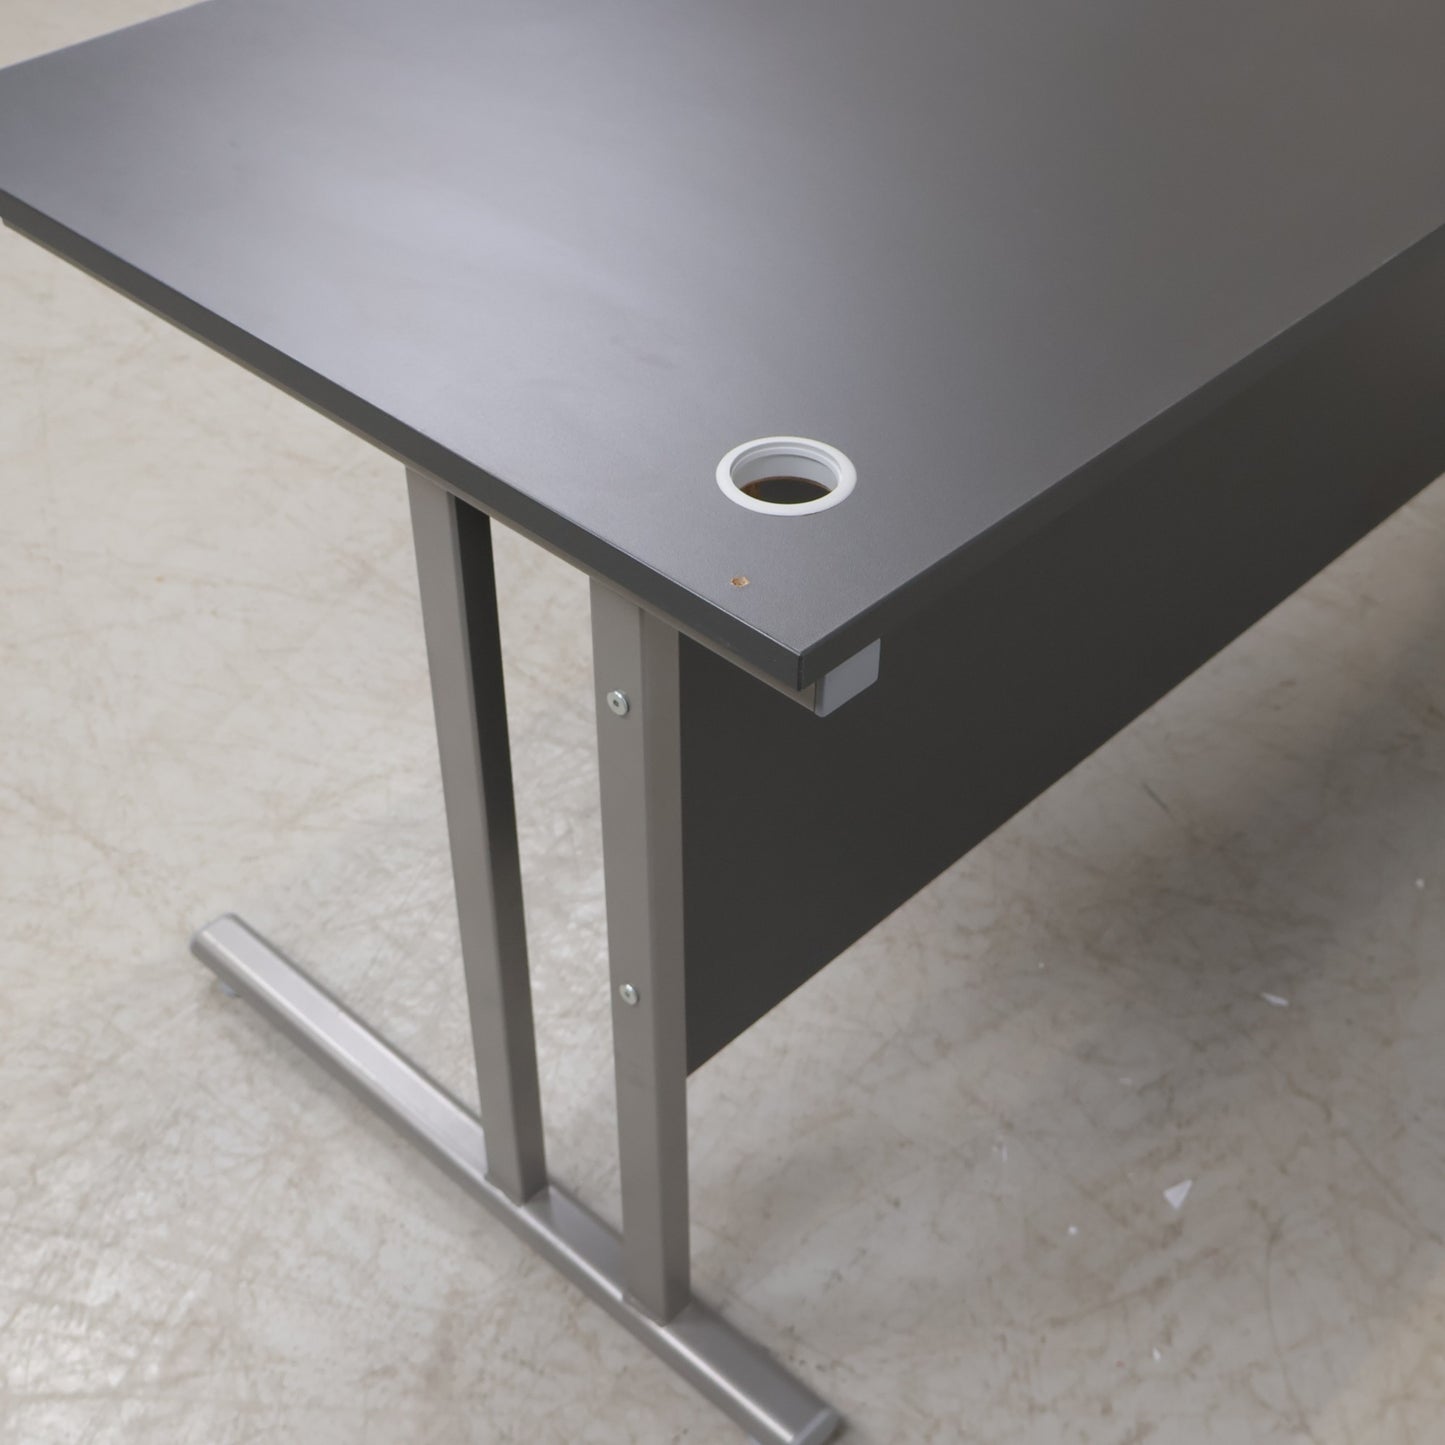 Kvalitetssikret | Flexus skrivebord fra AJ produkter, 160x80cm